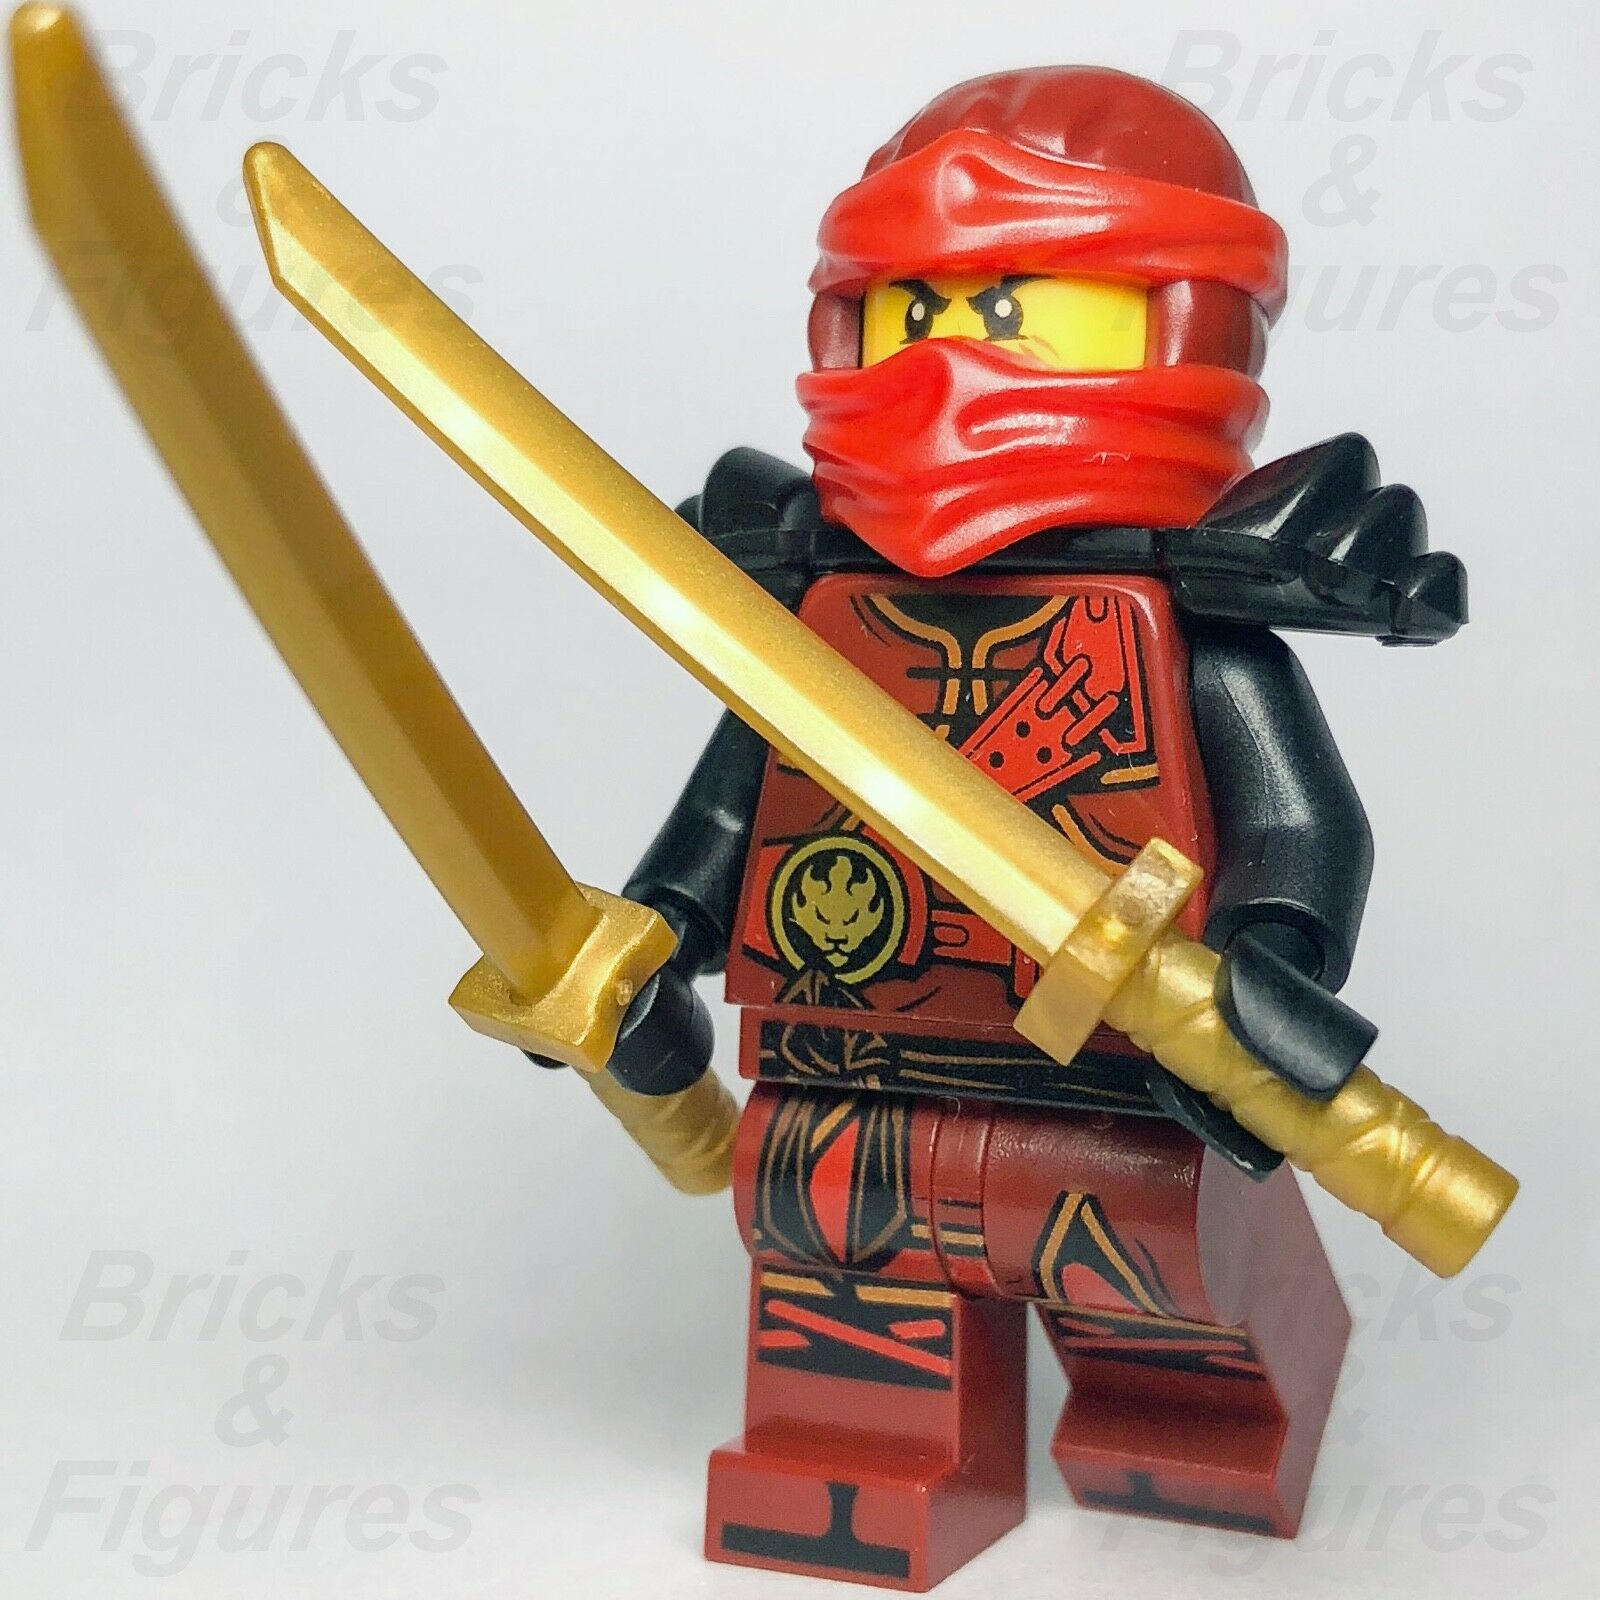 New Ninjago LEGO Red Fire Ninja Kai Hands of Time Minifigure 70627 891729 - Bricks & Figures